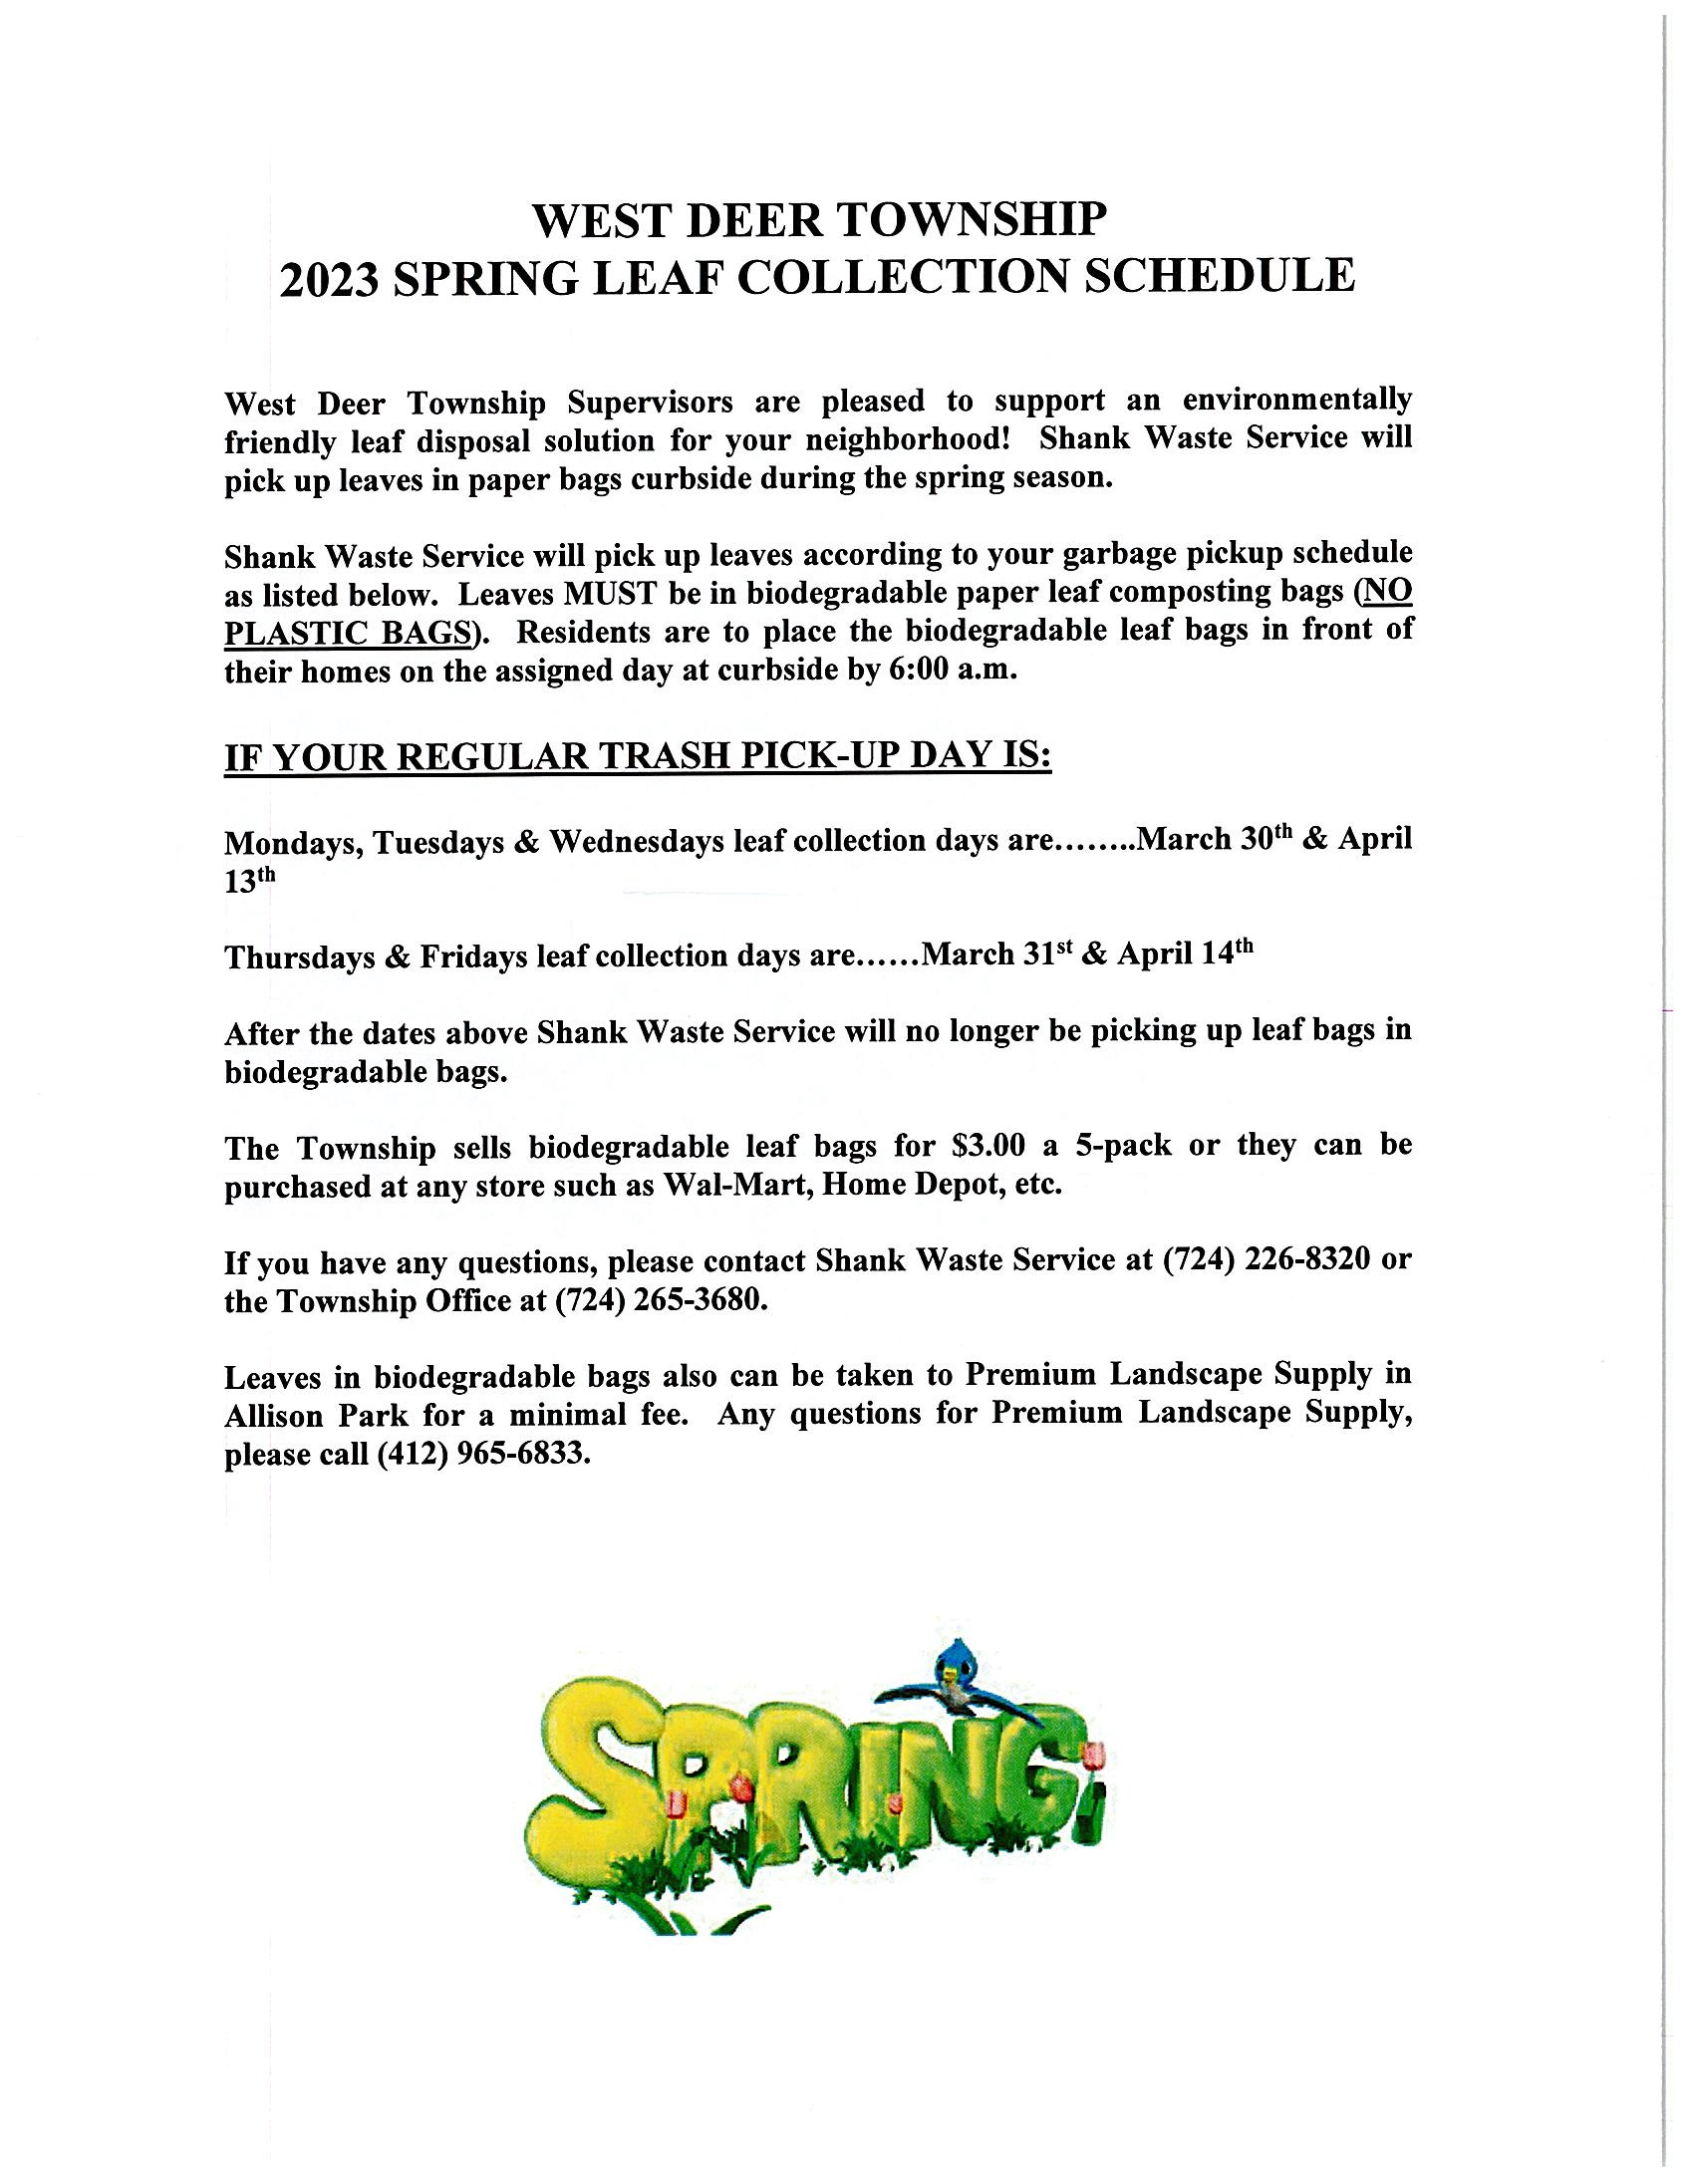 2023 Spring Leaf Collection Days